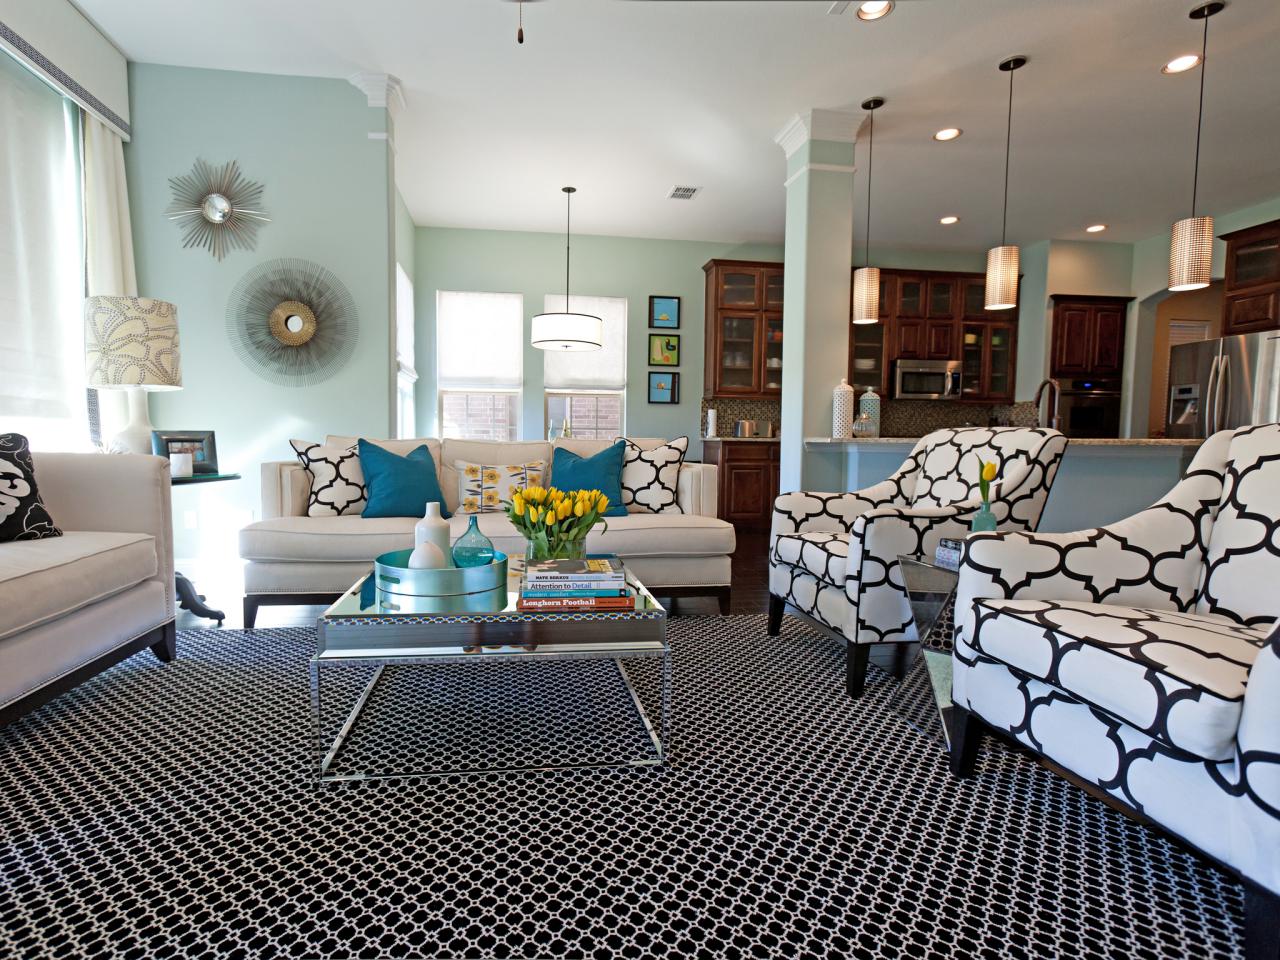 culori pentru un living modern colors for modern living room